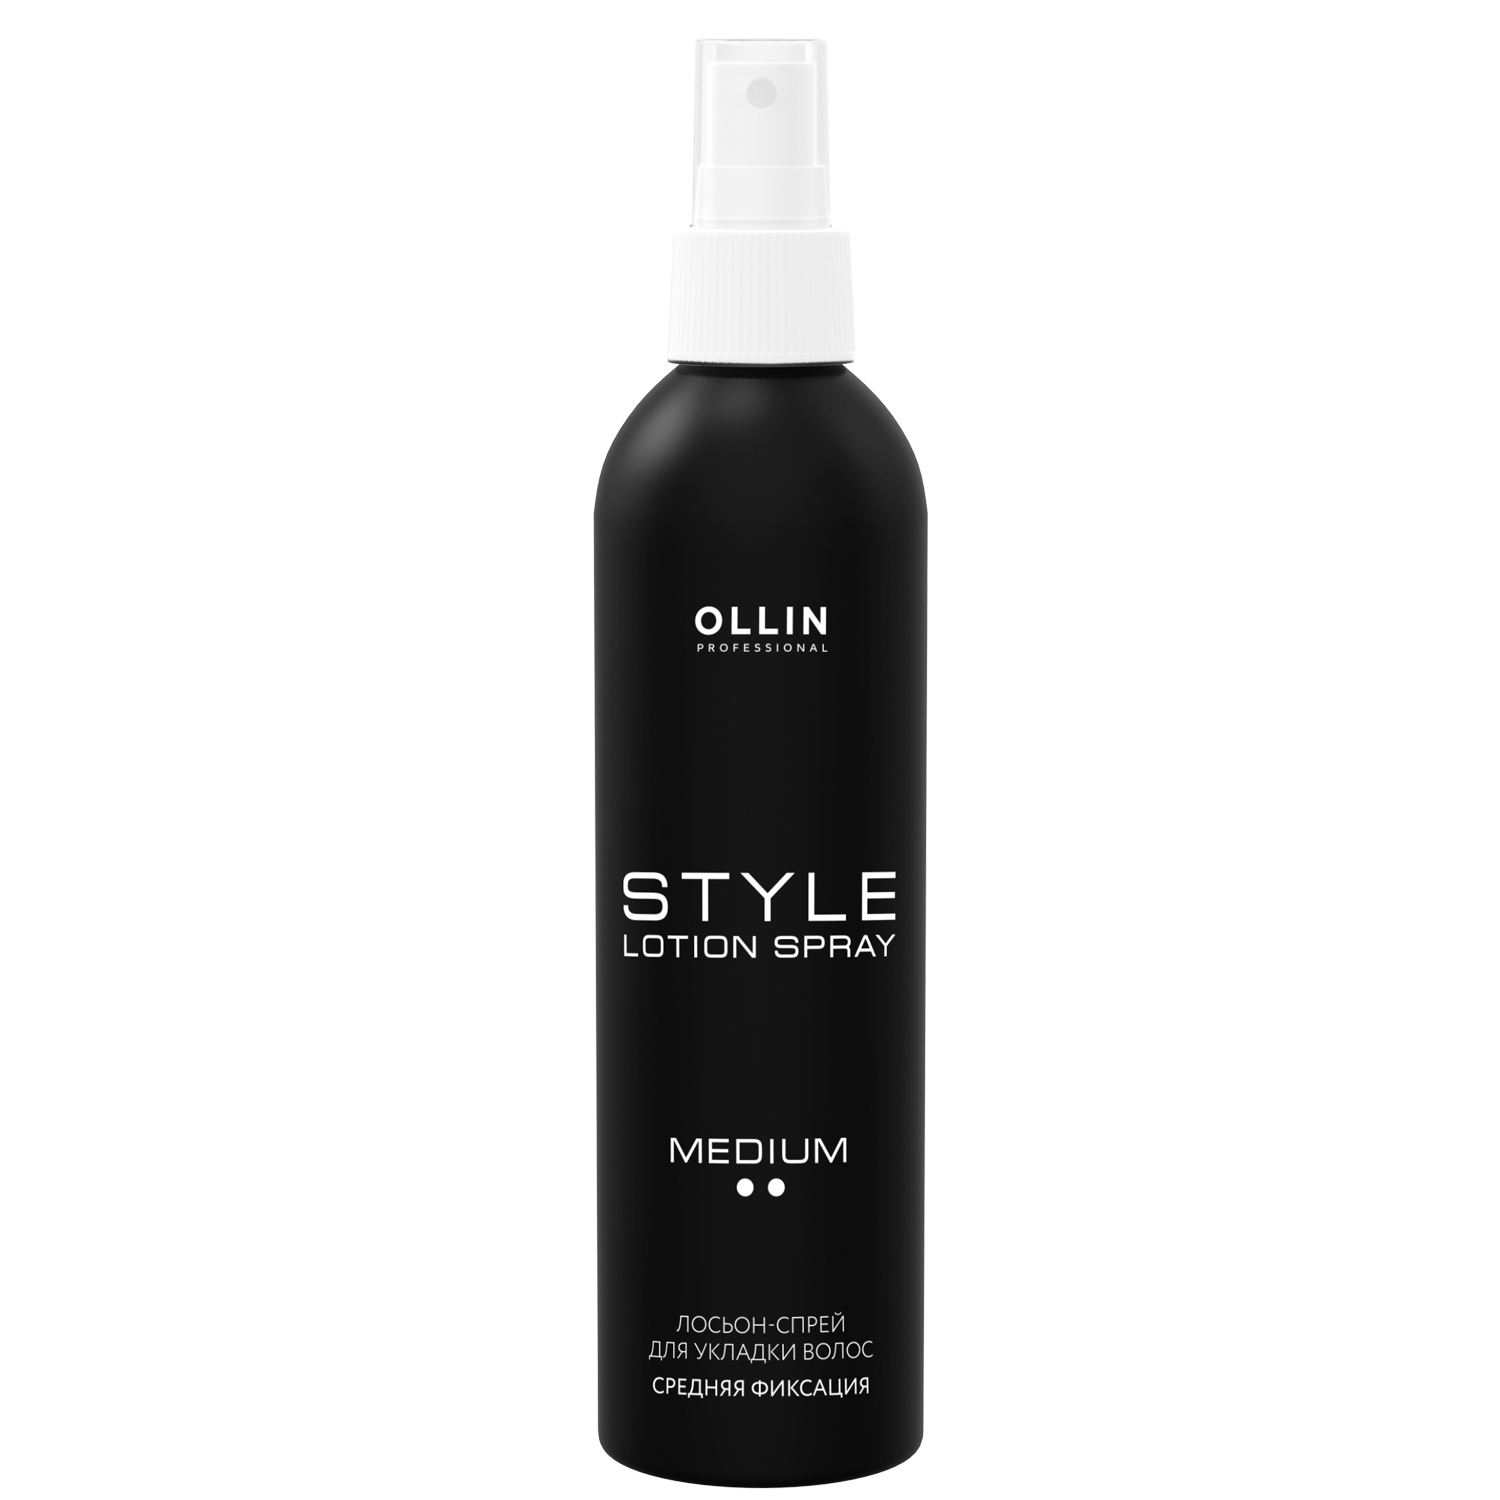 Ollin Professional Лосьон-спрей для укладки волос средней фиксации, 250 мл (Ollin Professional, Style) мусс для укладки средней фиксации ollin professional style 250 мл